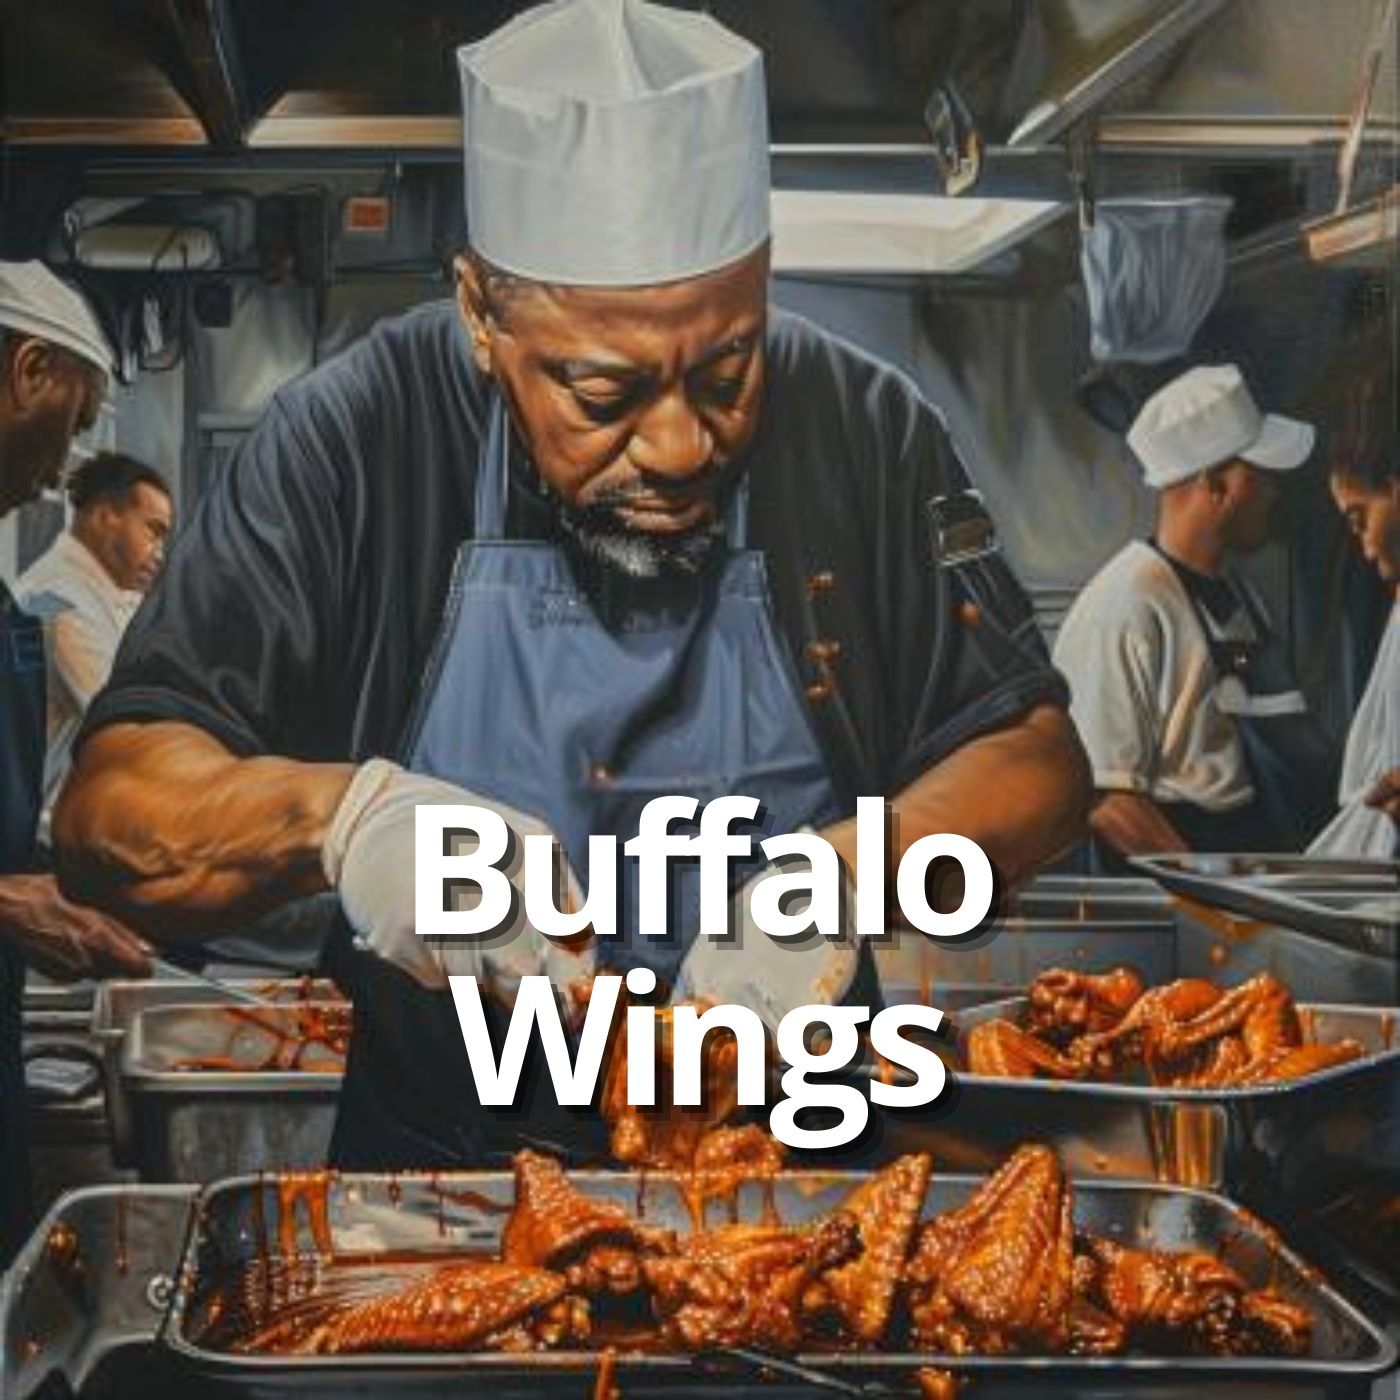 How a Black Man created Buffalo Wings